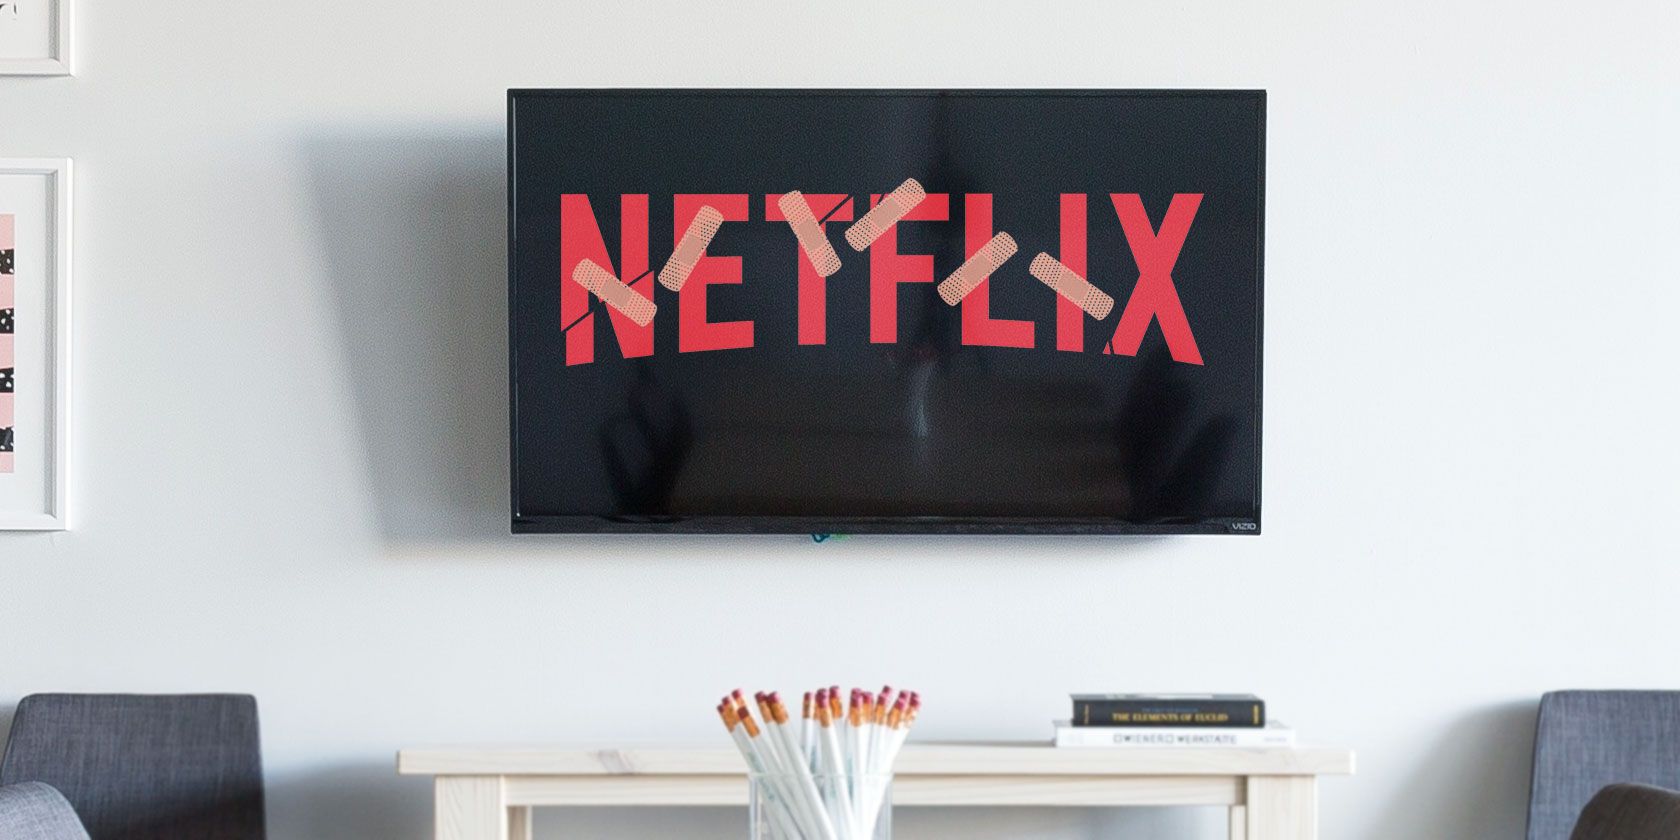 Netflix Keeps Crashing on Samsung Smart TV – How To Fix